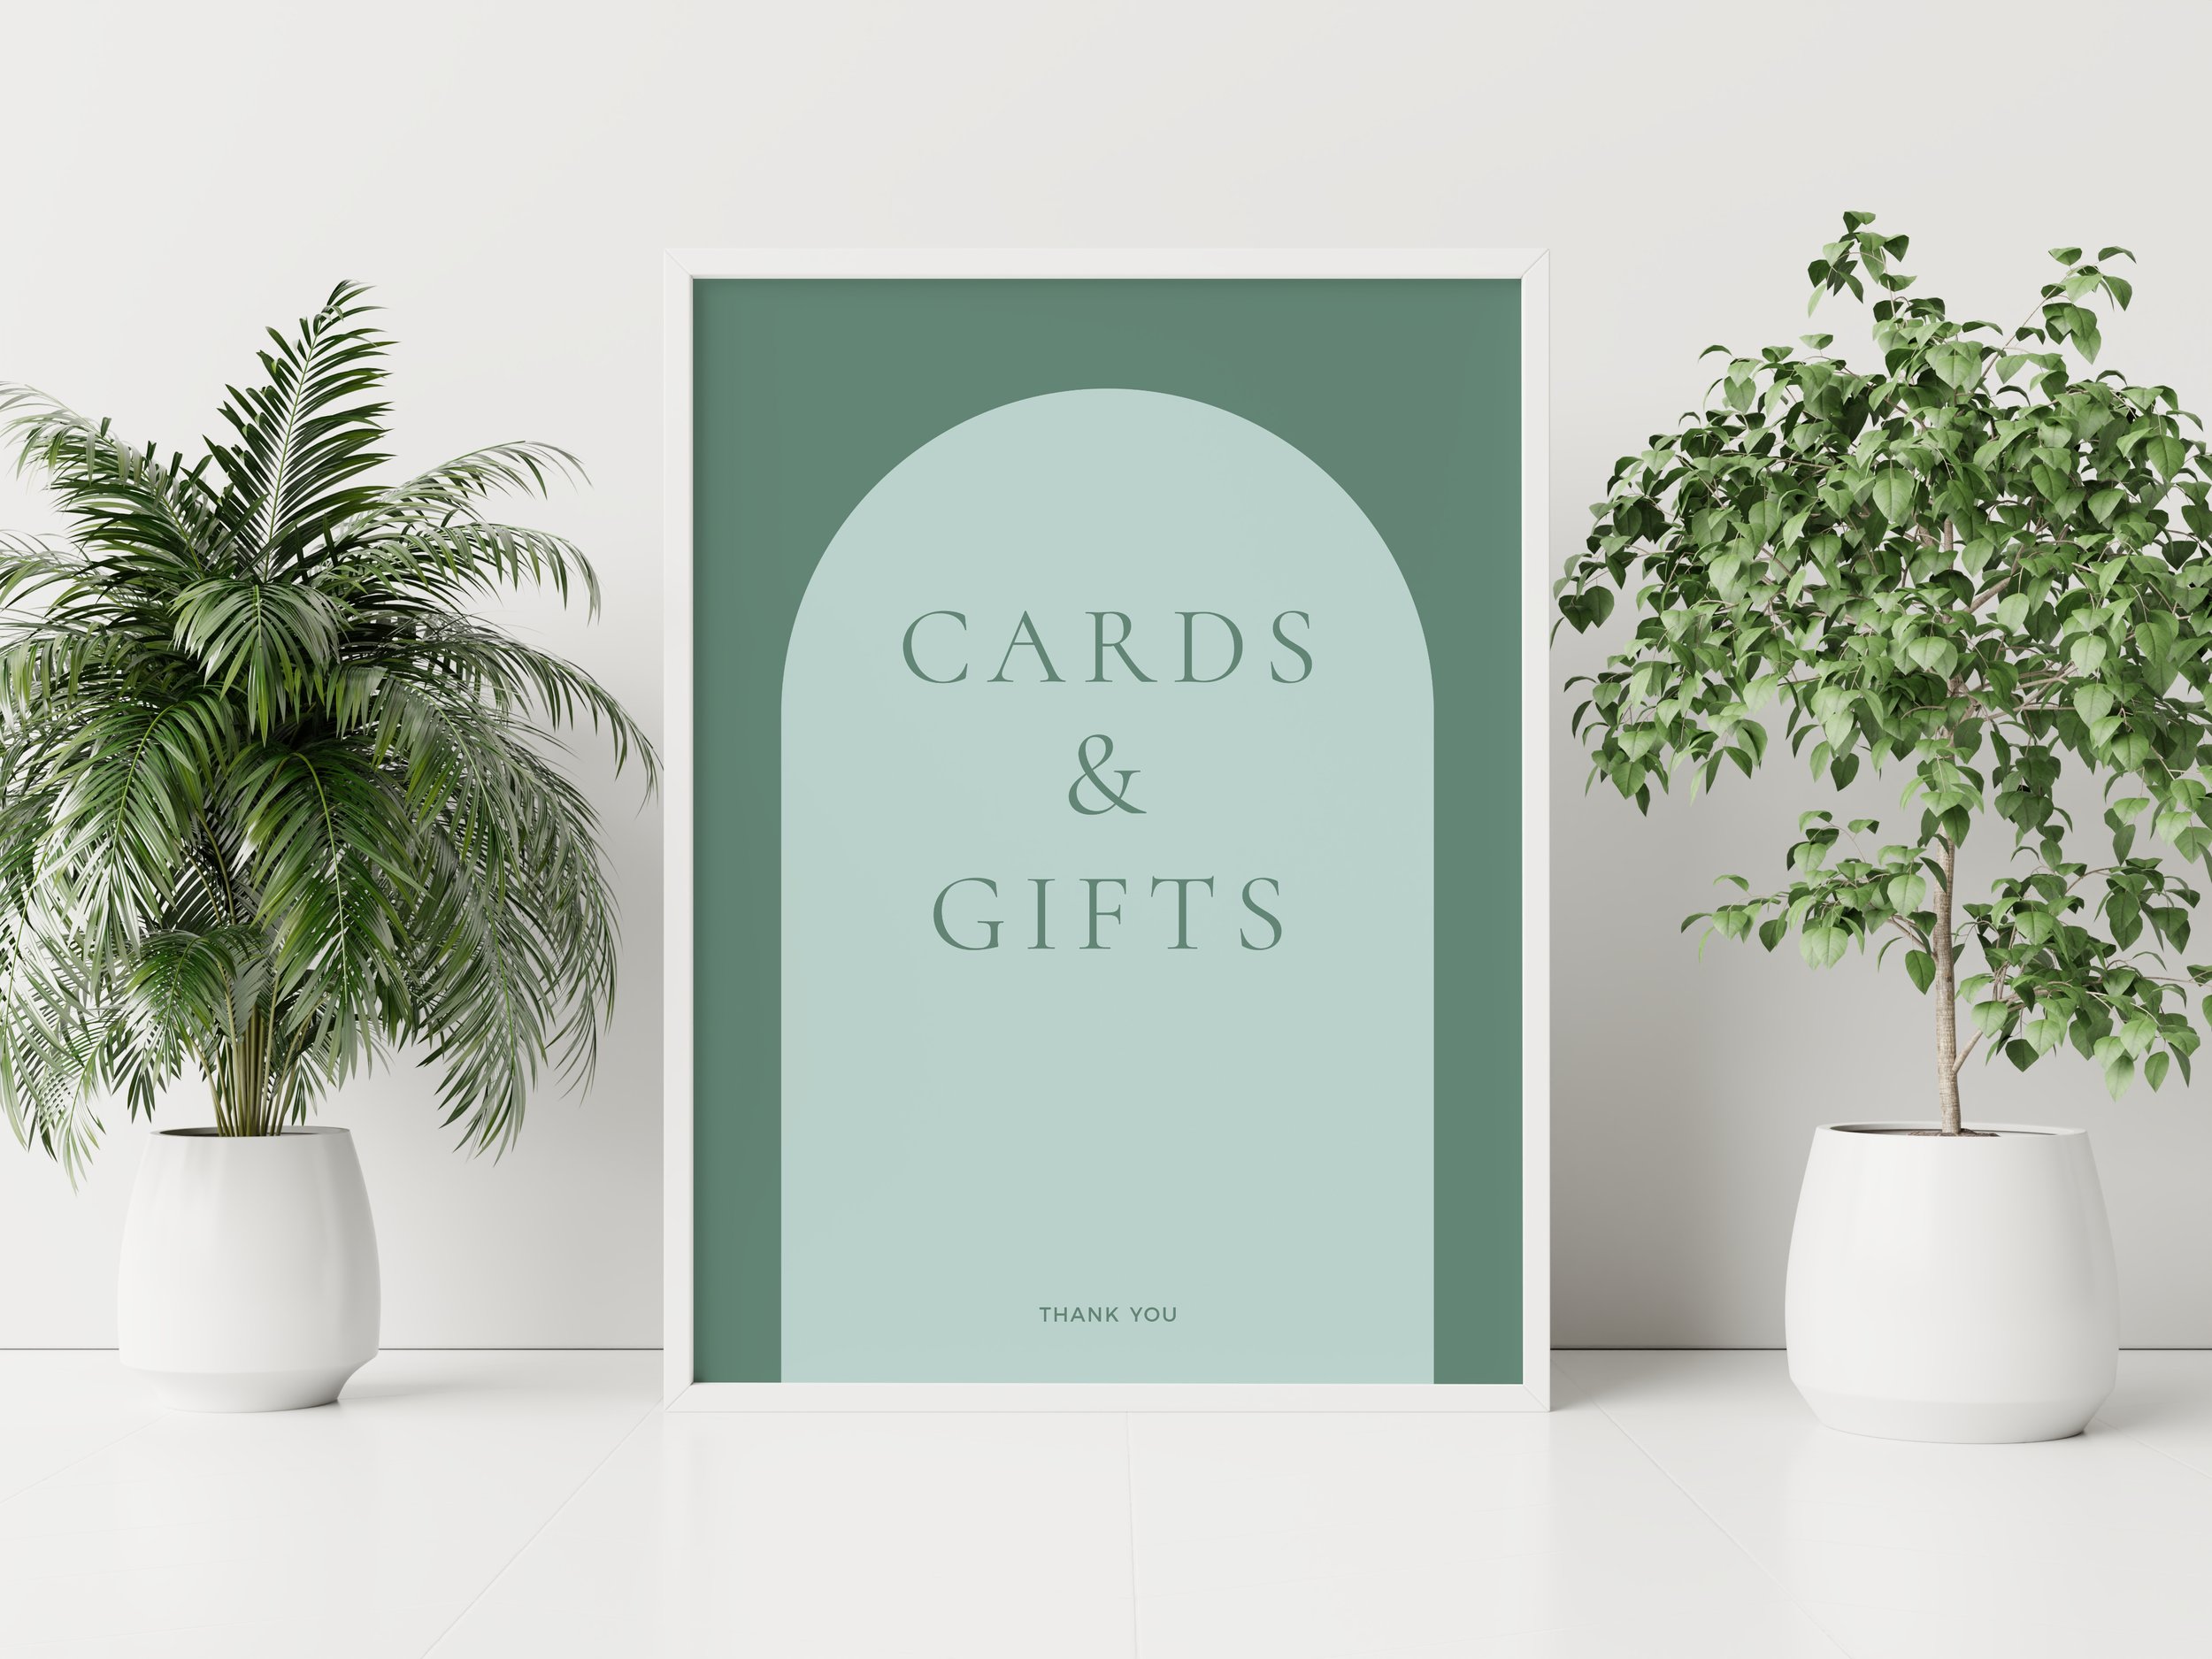 Cardsgifts_Plant.jpg